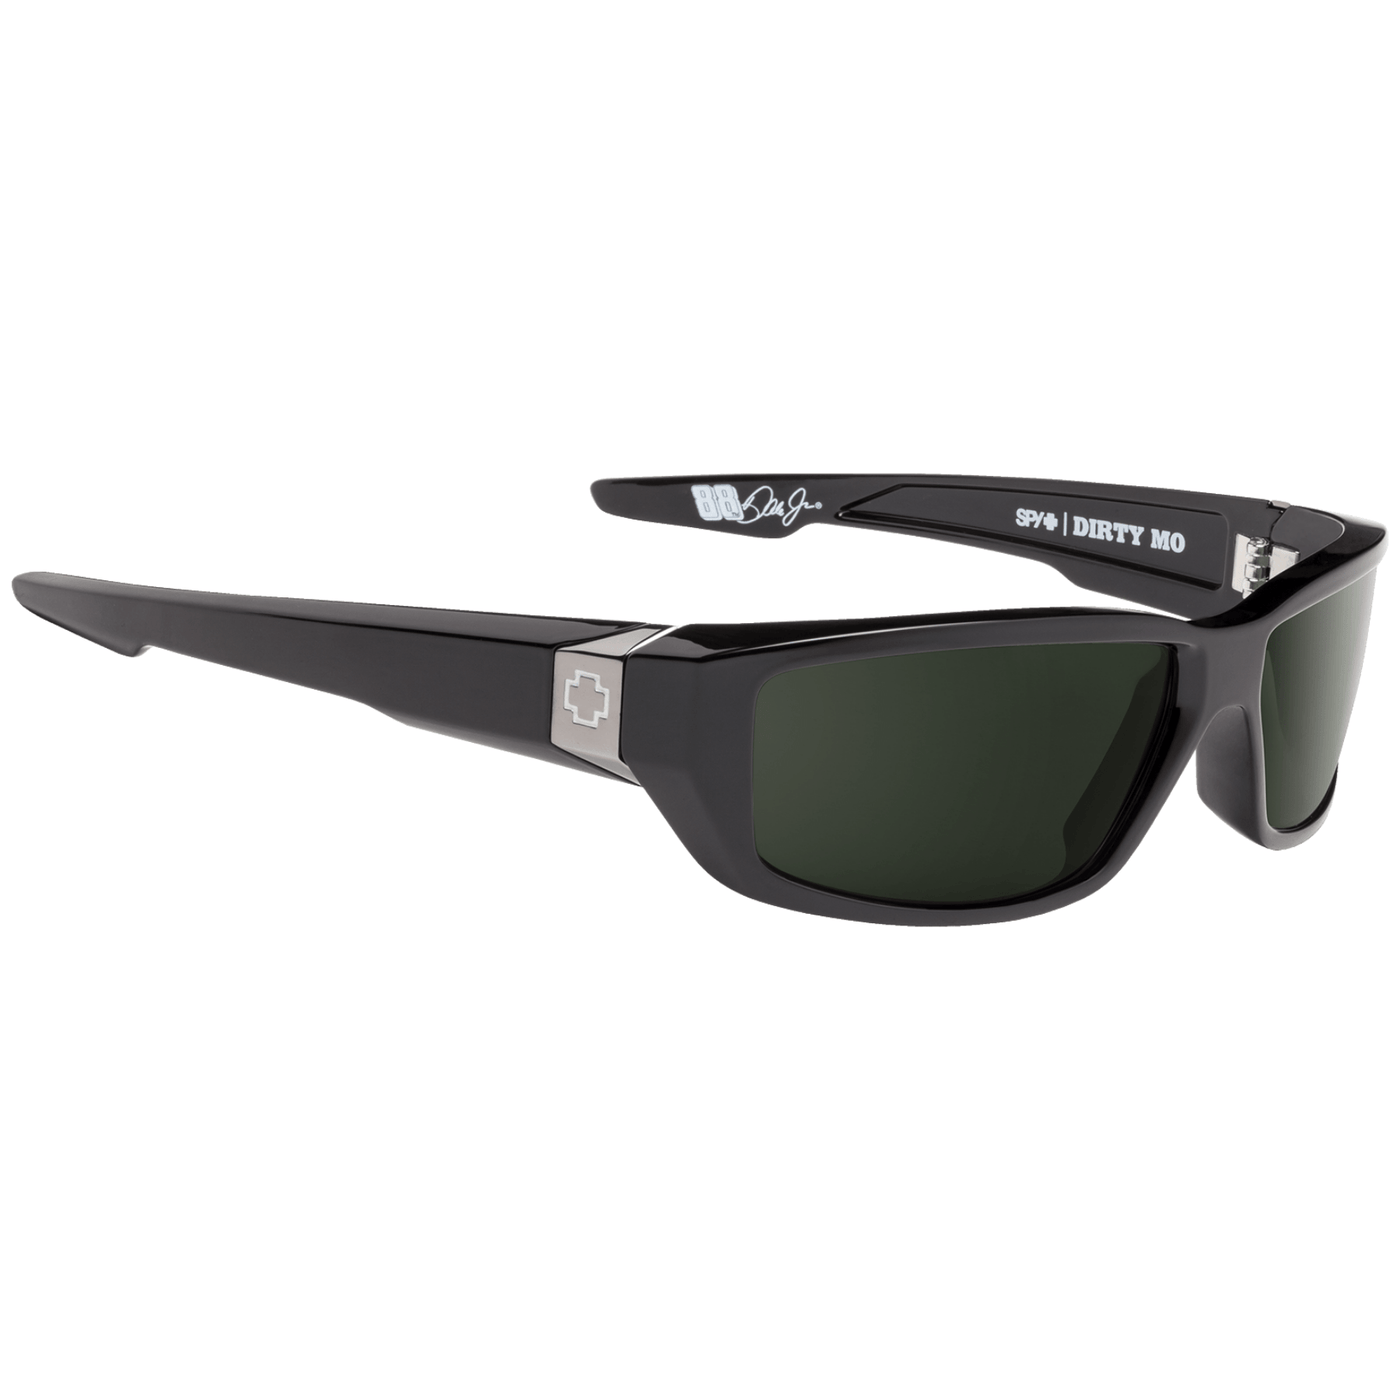 SPY DIRTY MO Polarized Sunglasses - Black 8Lines Shop - Fast Shipping